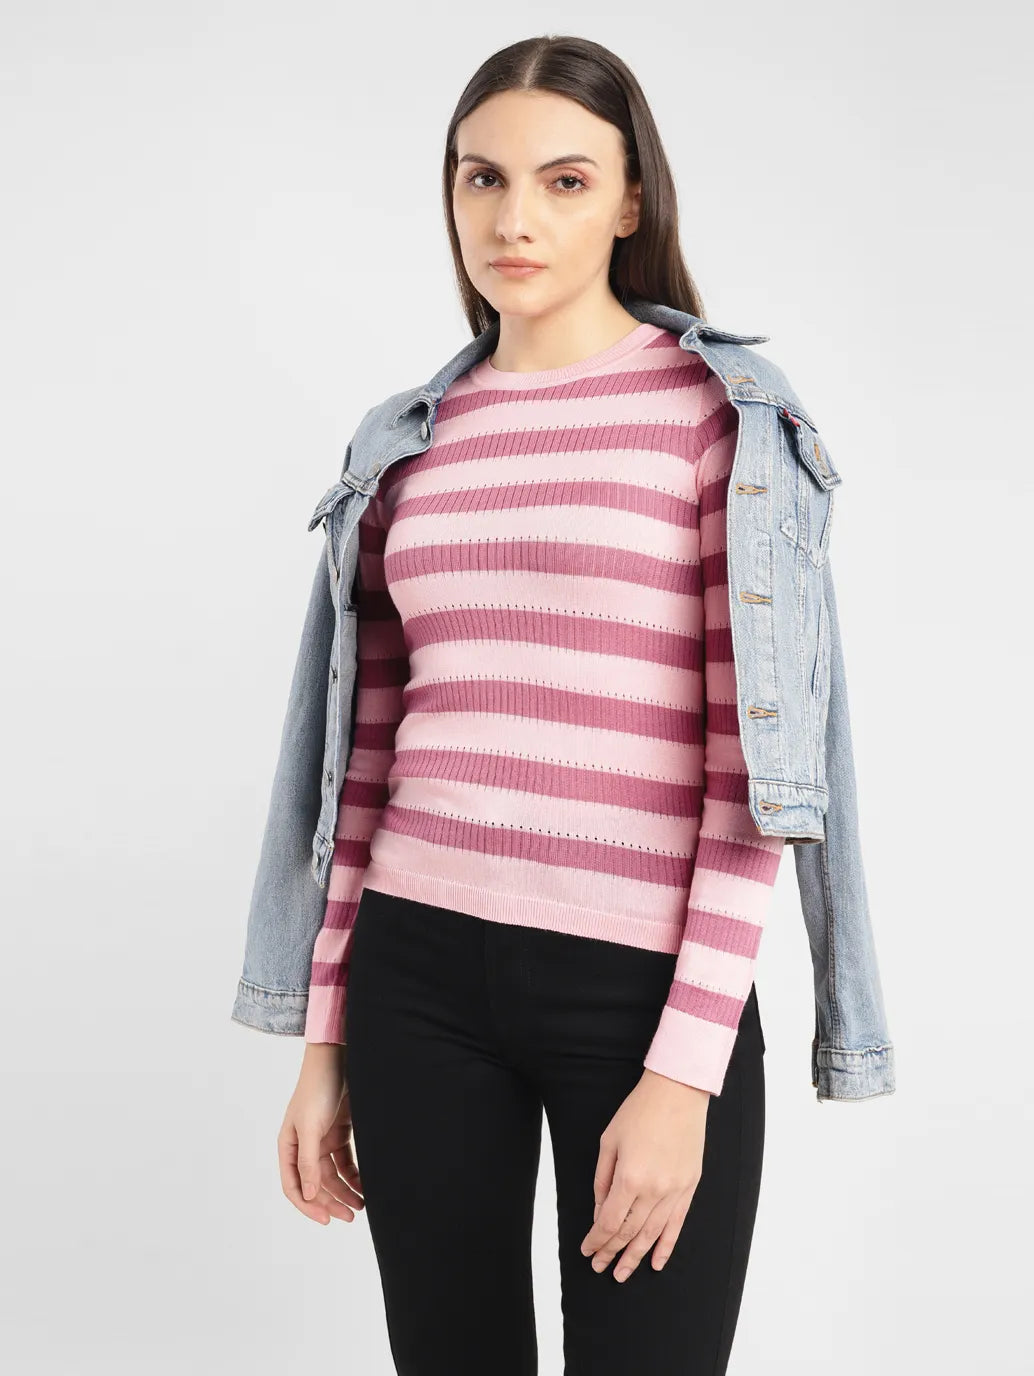 Women's Striped Pink Crew Neck Sweater